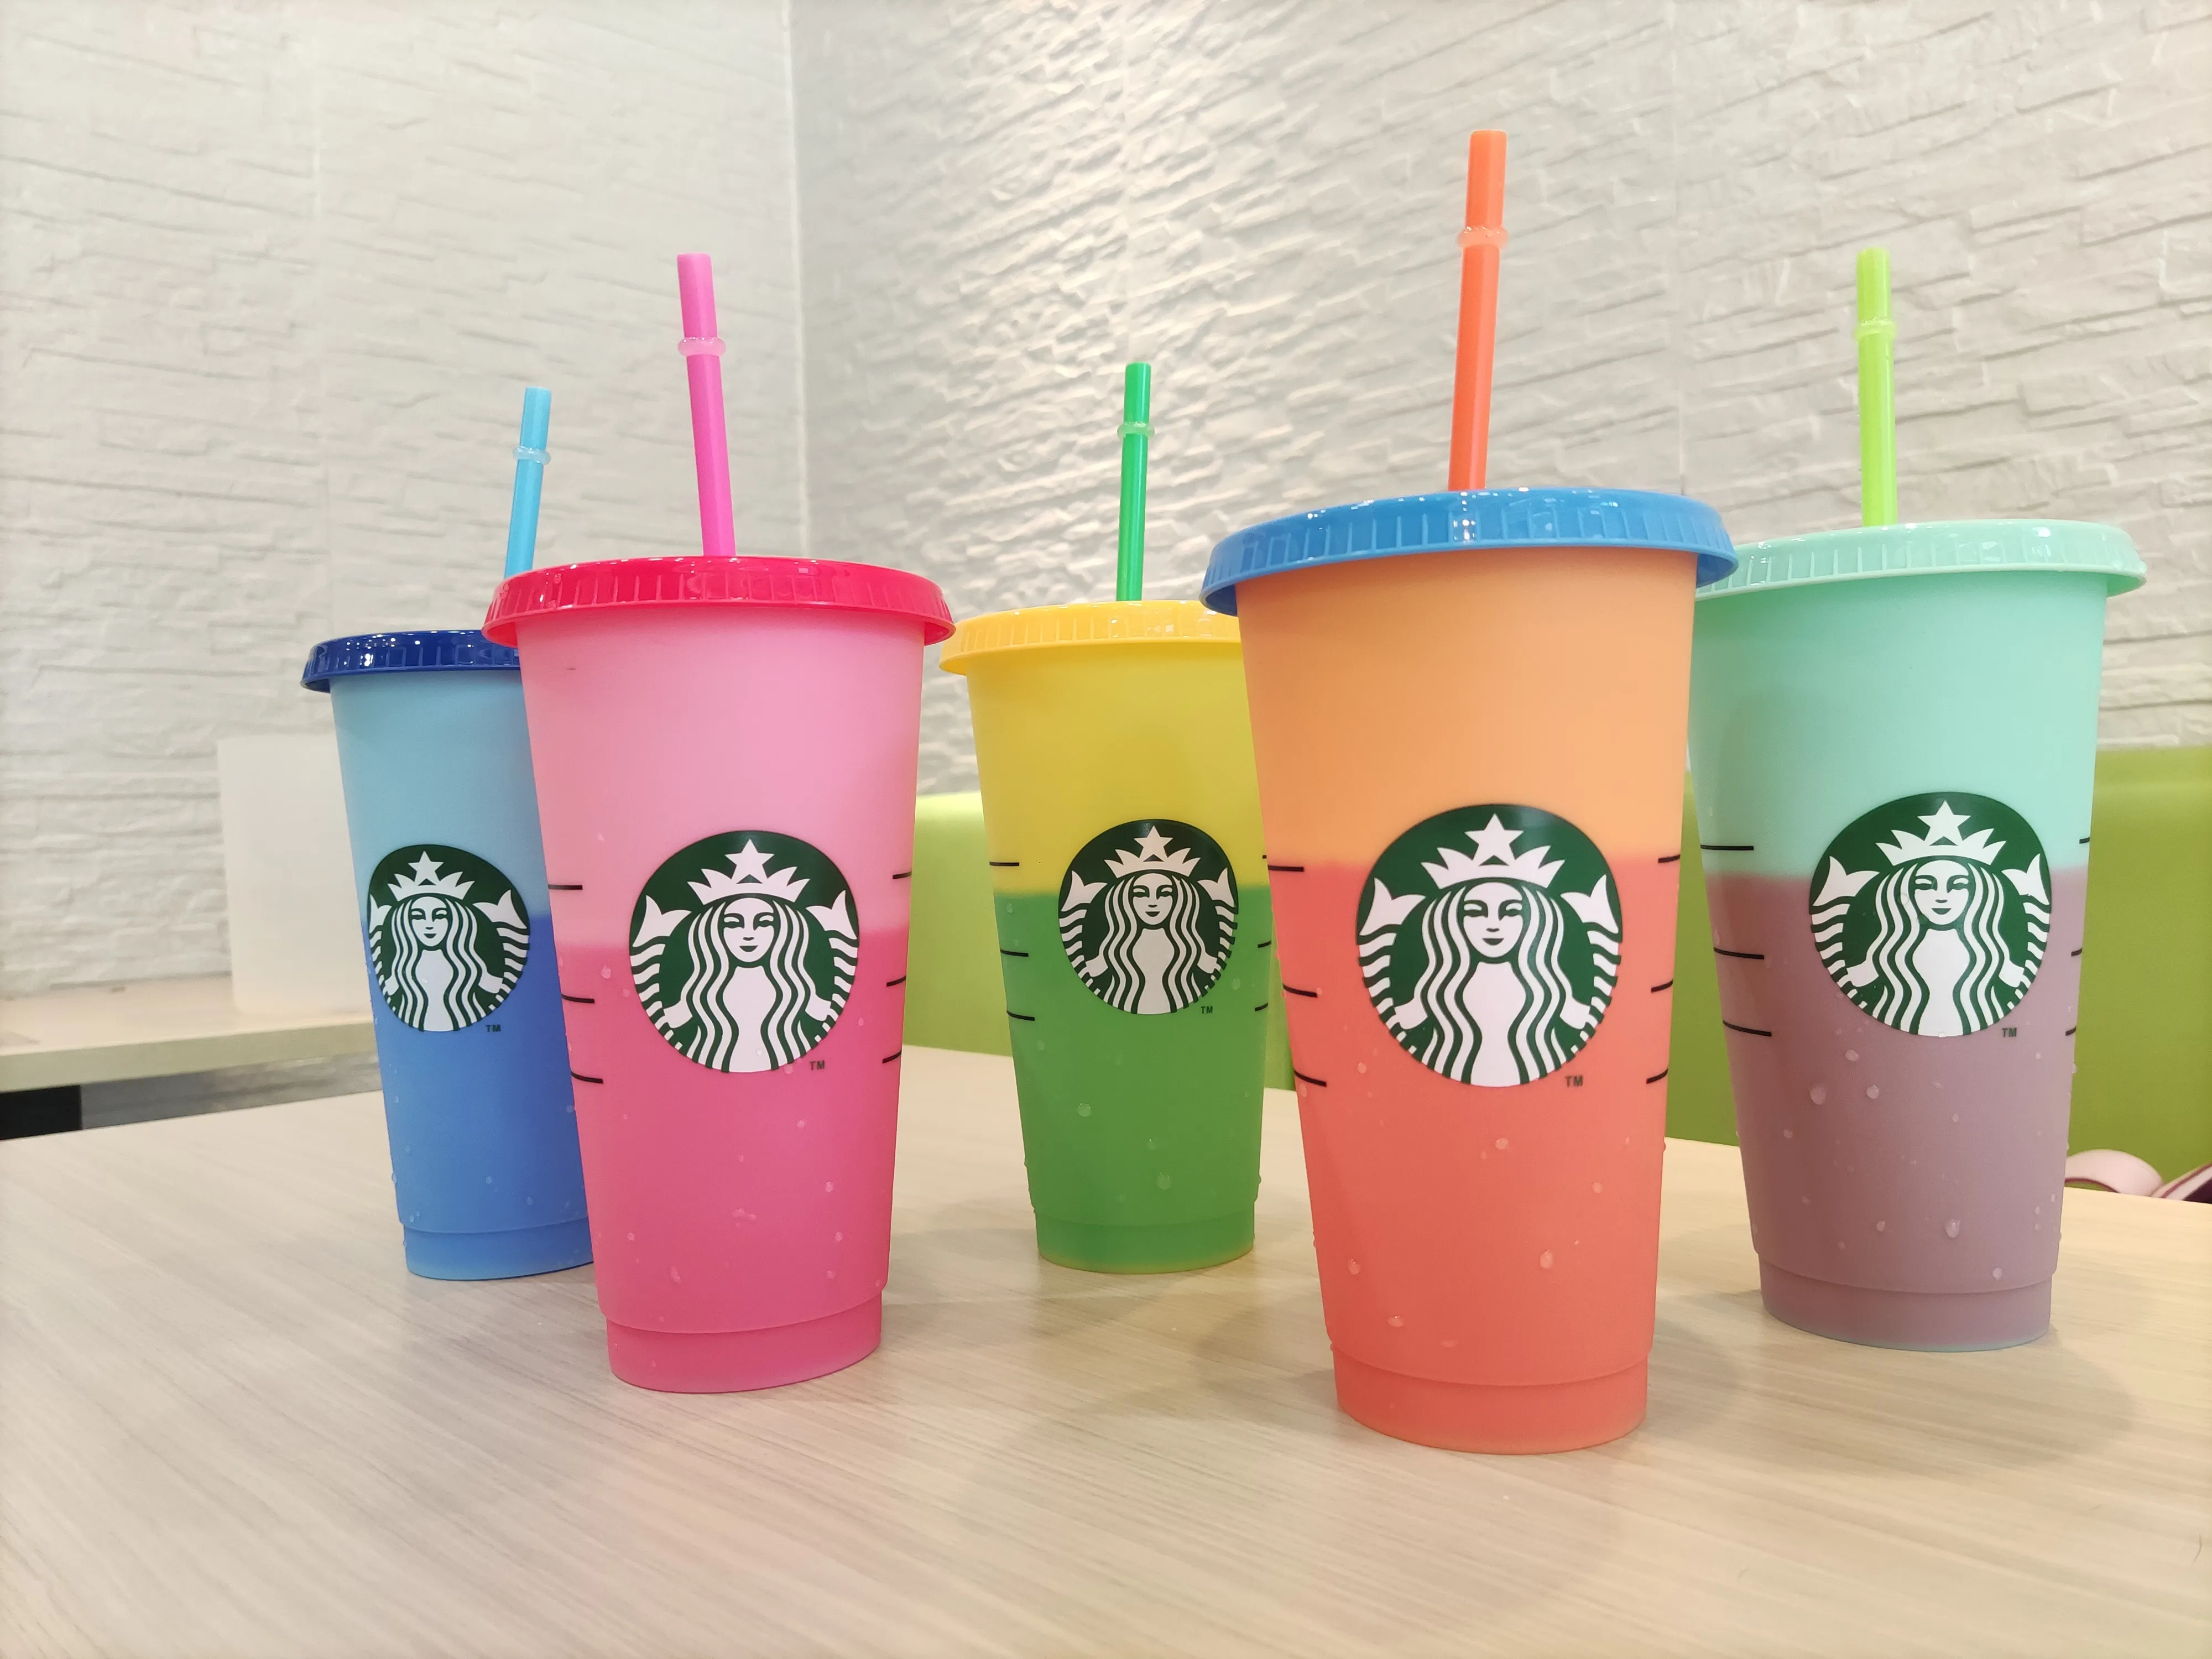 24 Oz Starbucks Reusable Cup Fast Shipping/ Plain Starbucks Cup